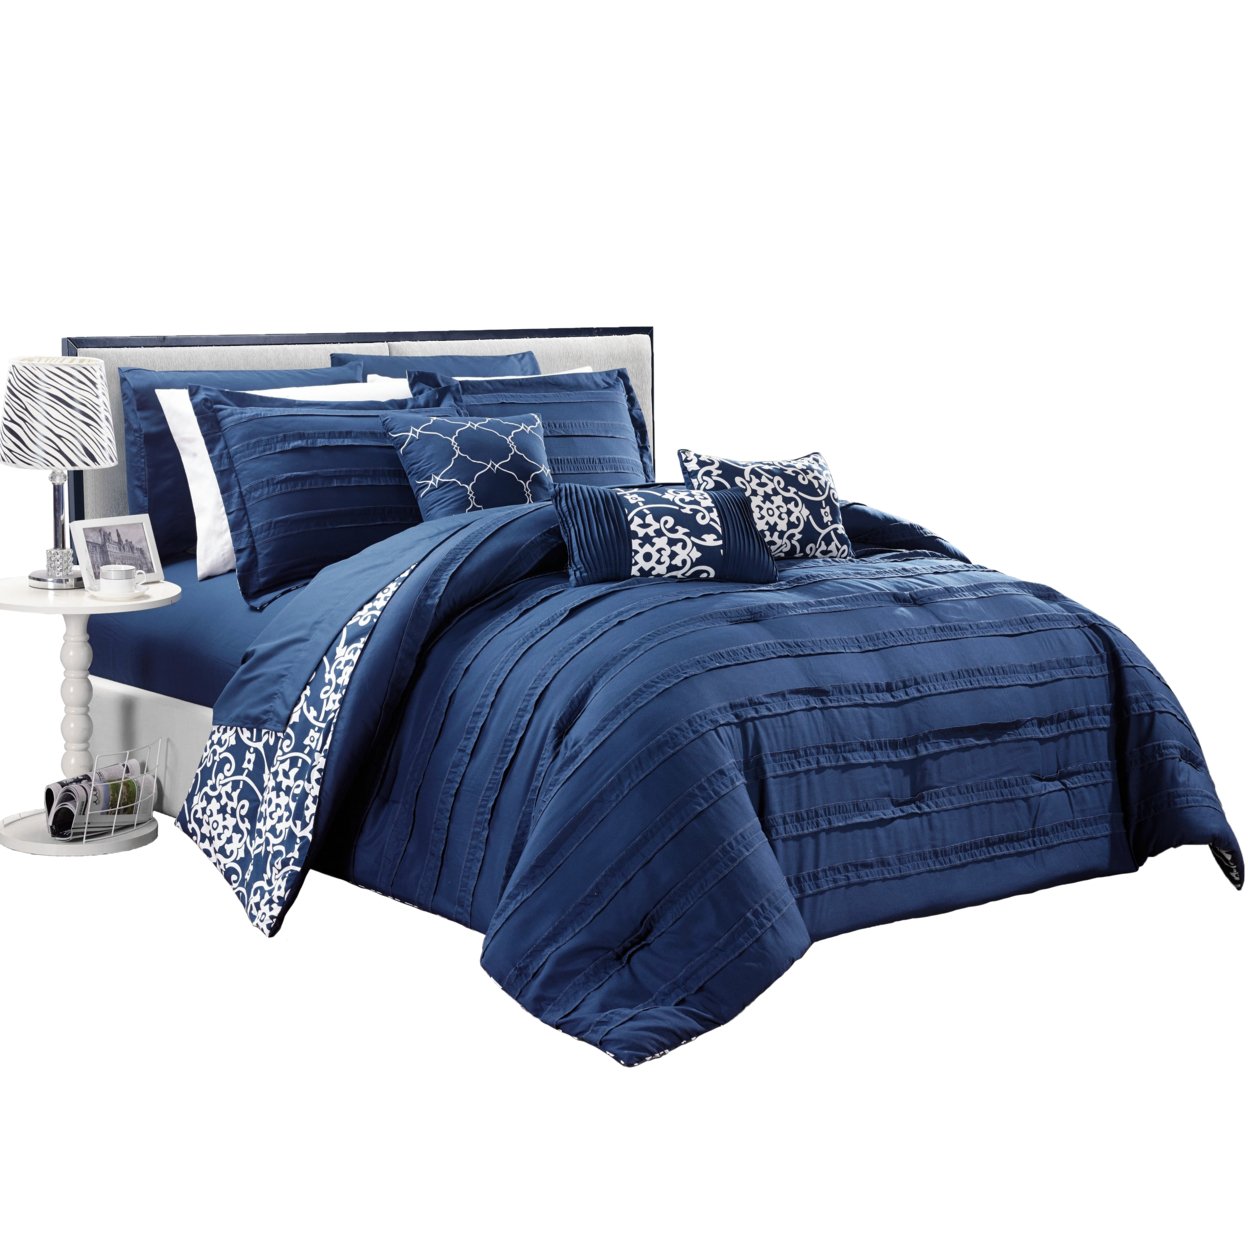 10-Piece Reversible Bed In A Bag Comforter & Sheet Set, Multiple Colors - Plum, Queen